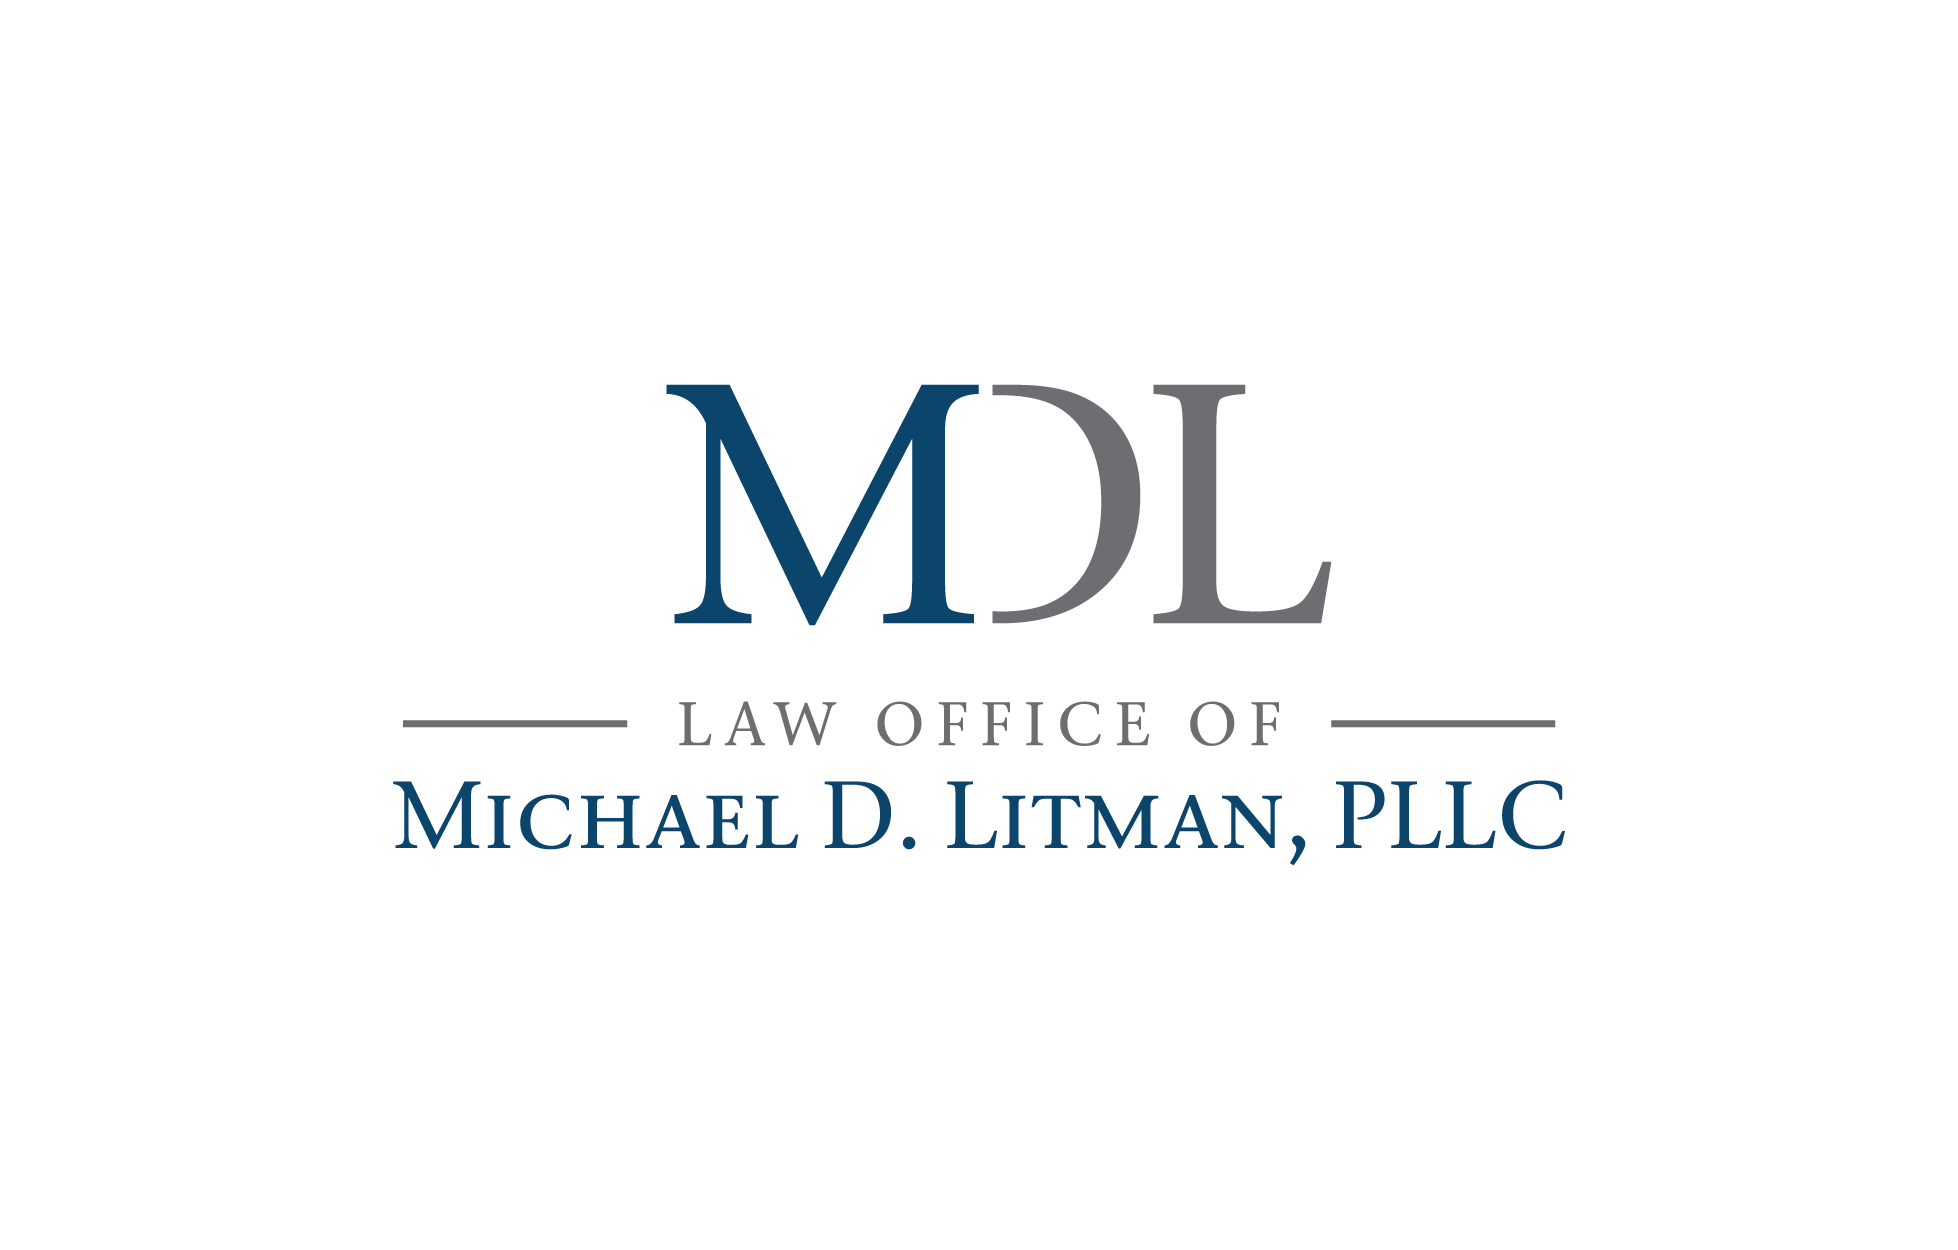 Law Office of Michael D. Litman, PLLC